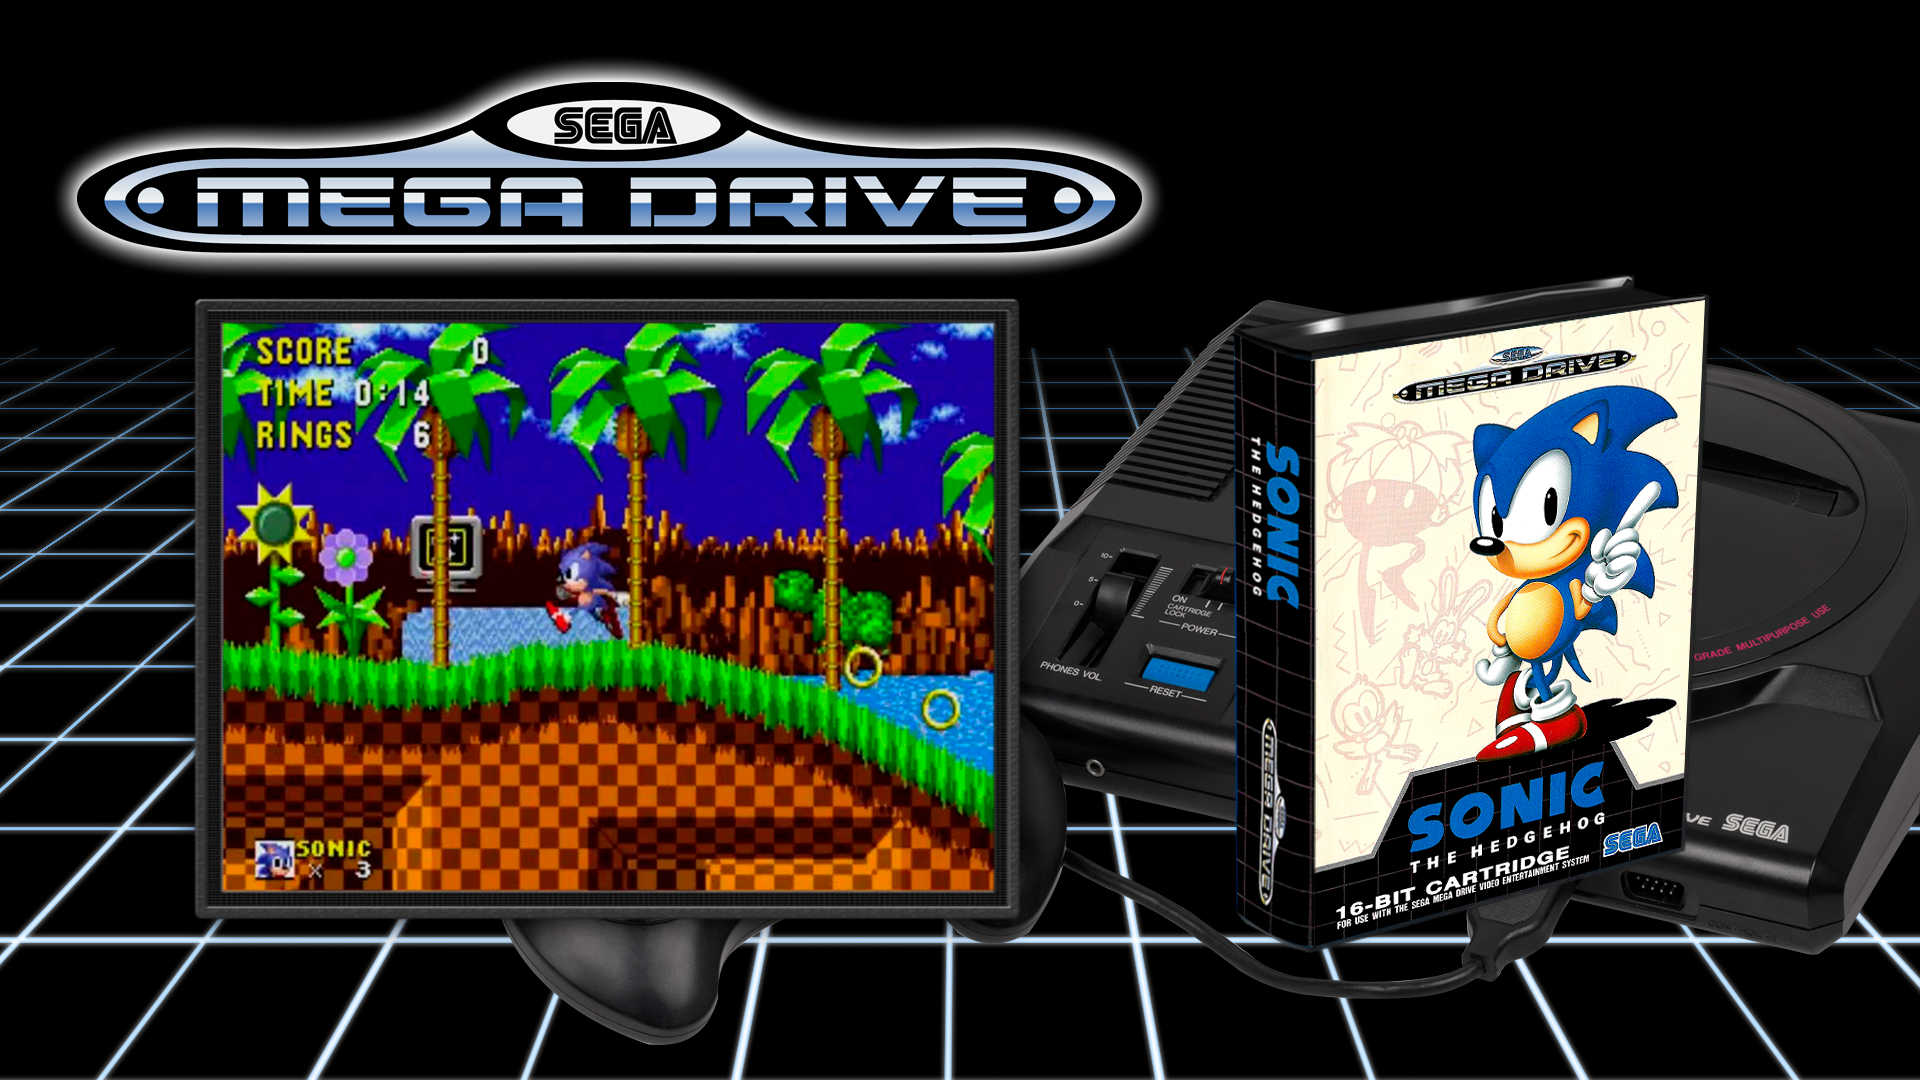 Супер сега игры. Sega Mega Drive колокольчики. Sega Heroes Sega Mega Drive Sega Mini. Sega Mega Drive 16 бит. Sega Mega Drive 2 эмулятор ПСП.